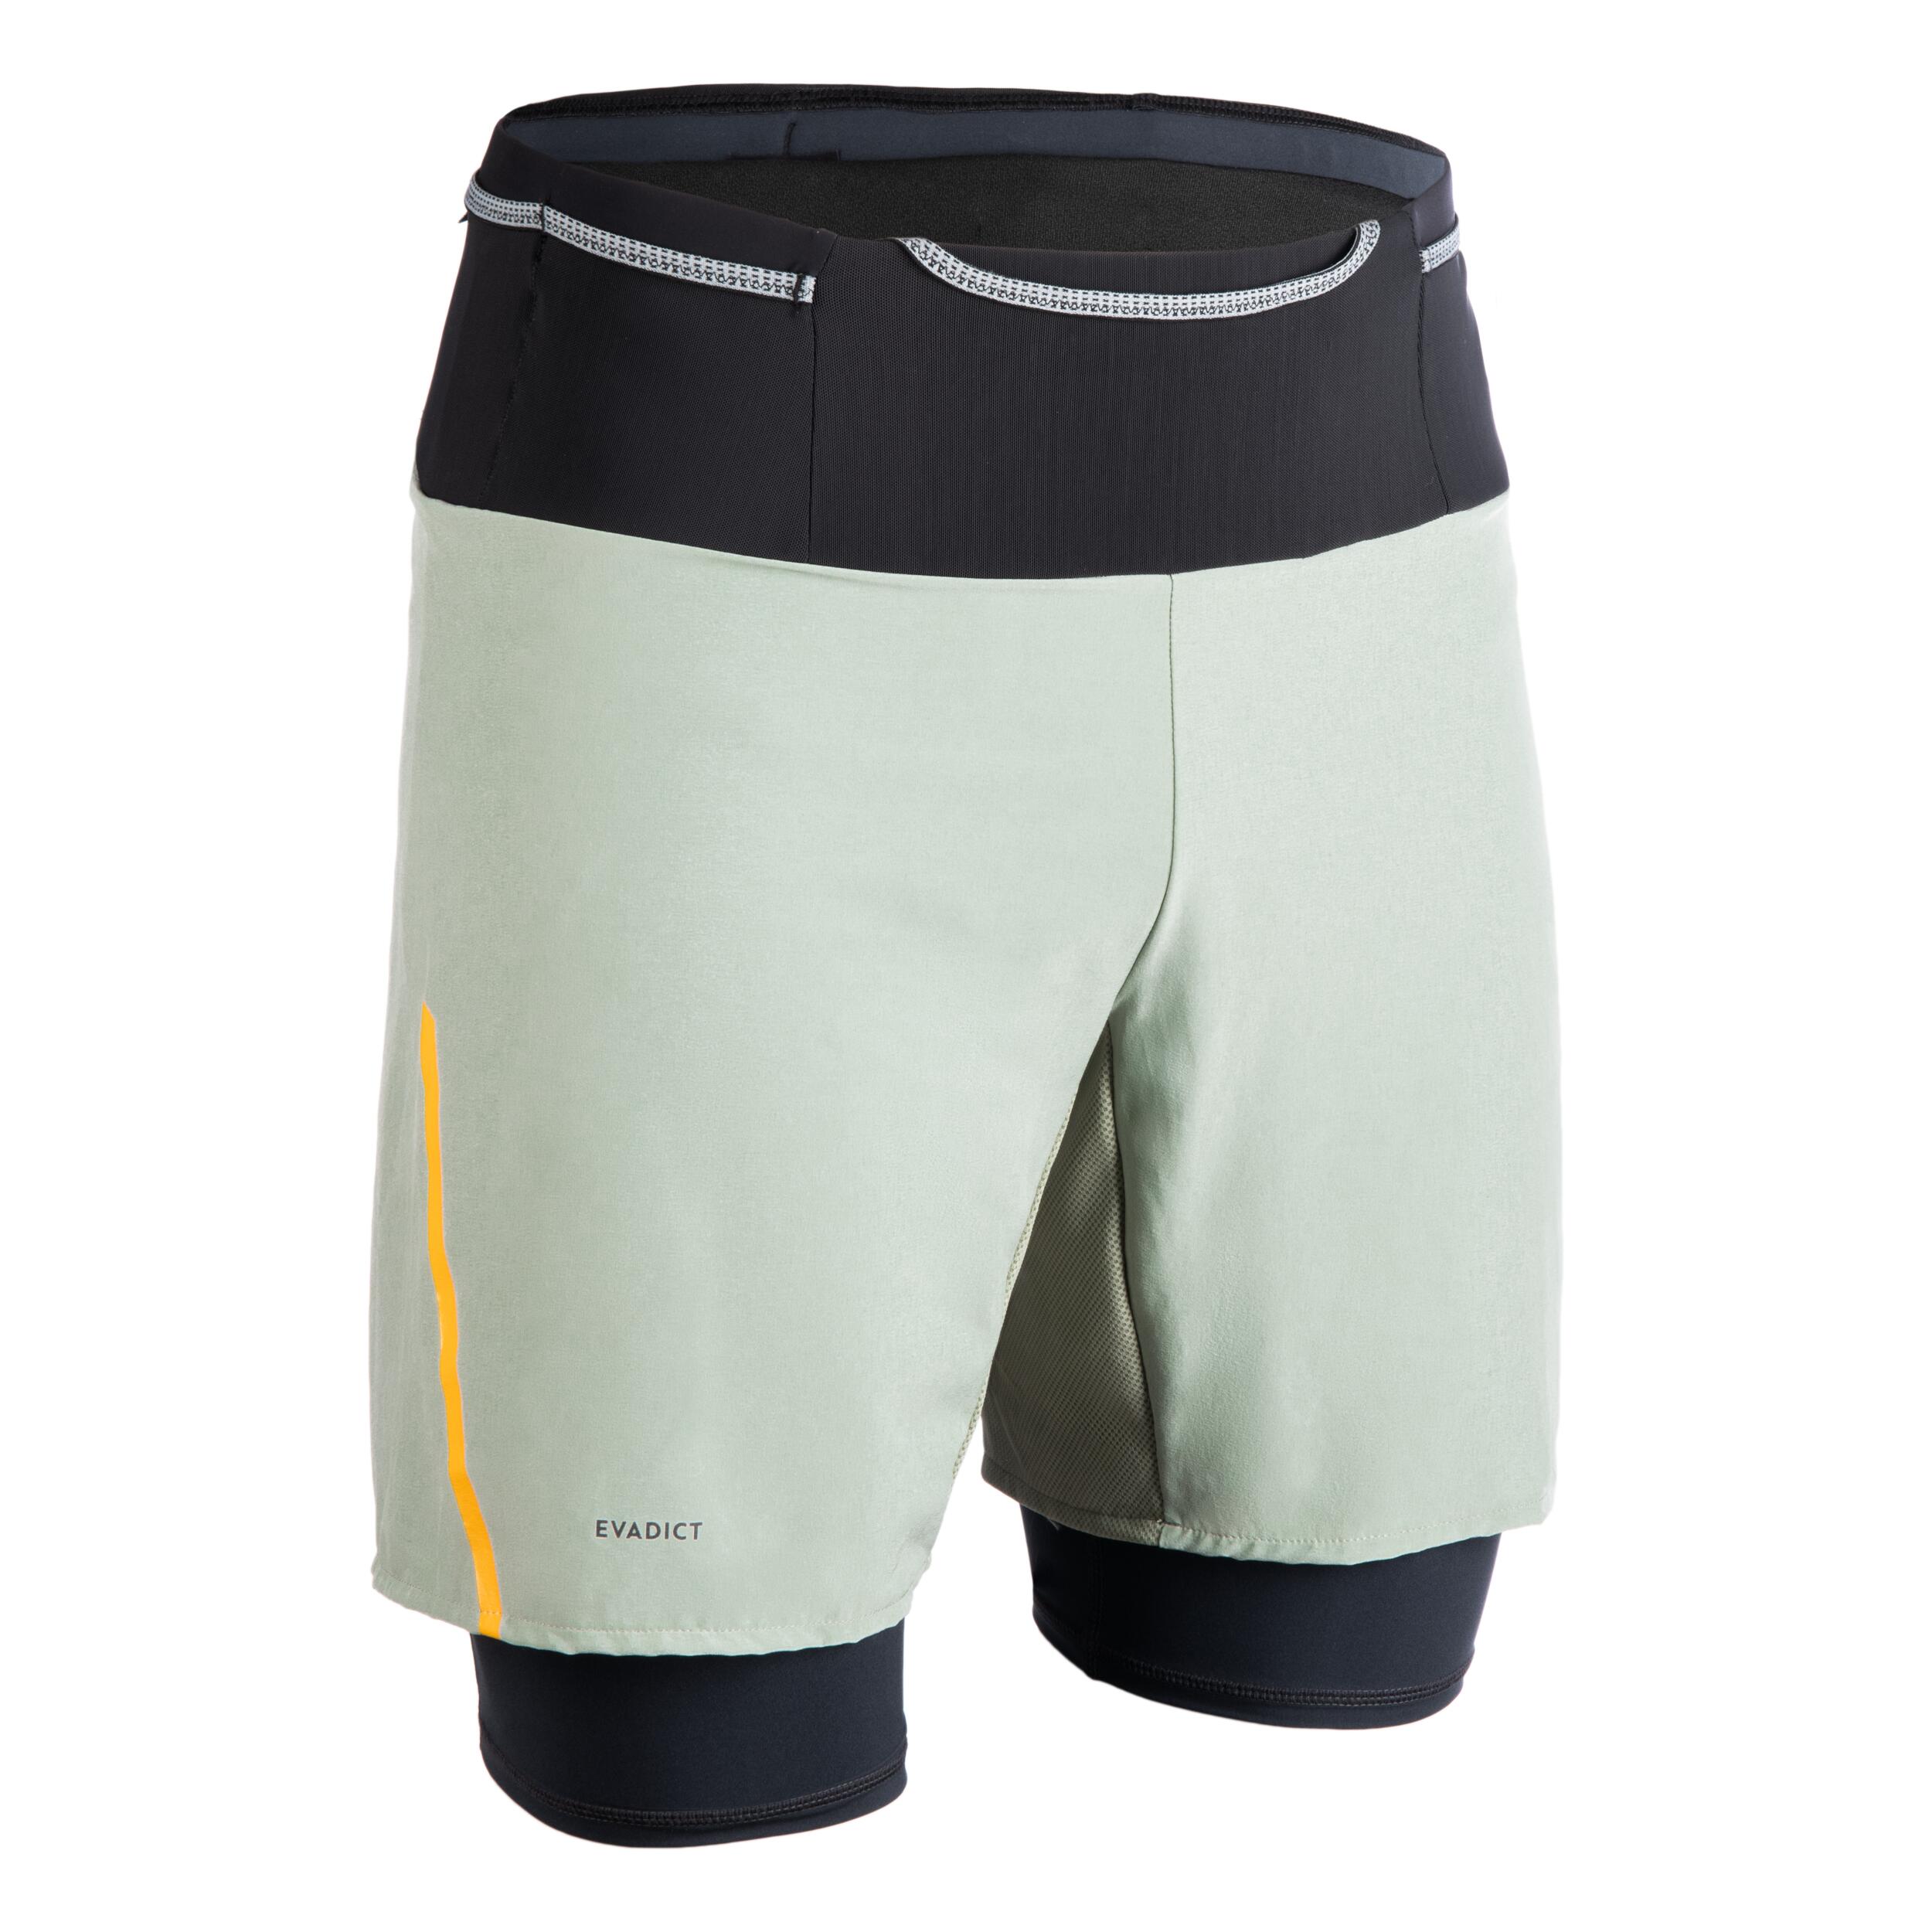 https://contents.mediadecathlon.com/p2174772/k$38779496cb86fb23b6af776e977ff558/men-s-comfort-trail-running-shorts-tight-shorts-khaki-evadict-8666204.jpg